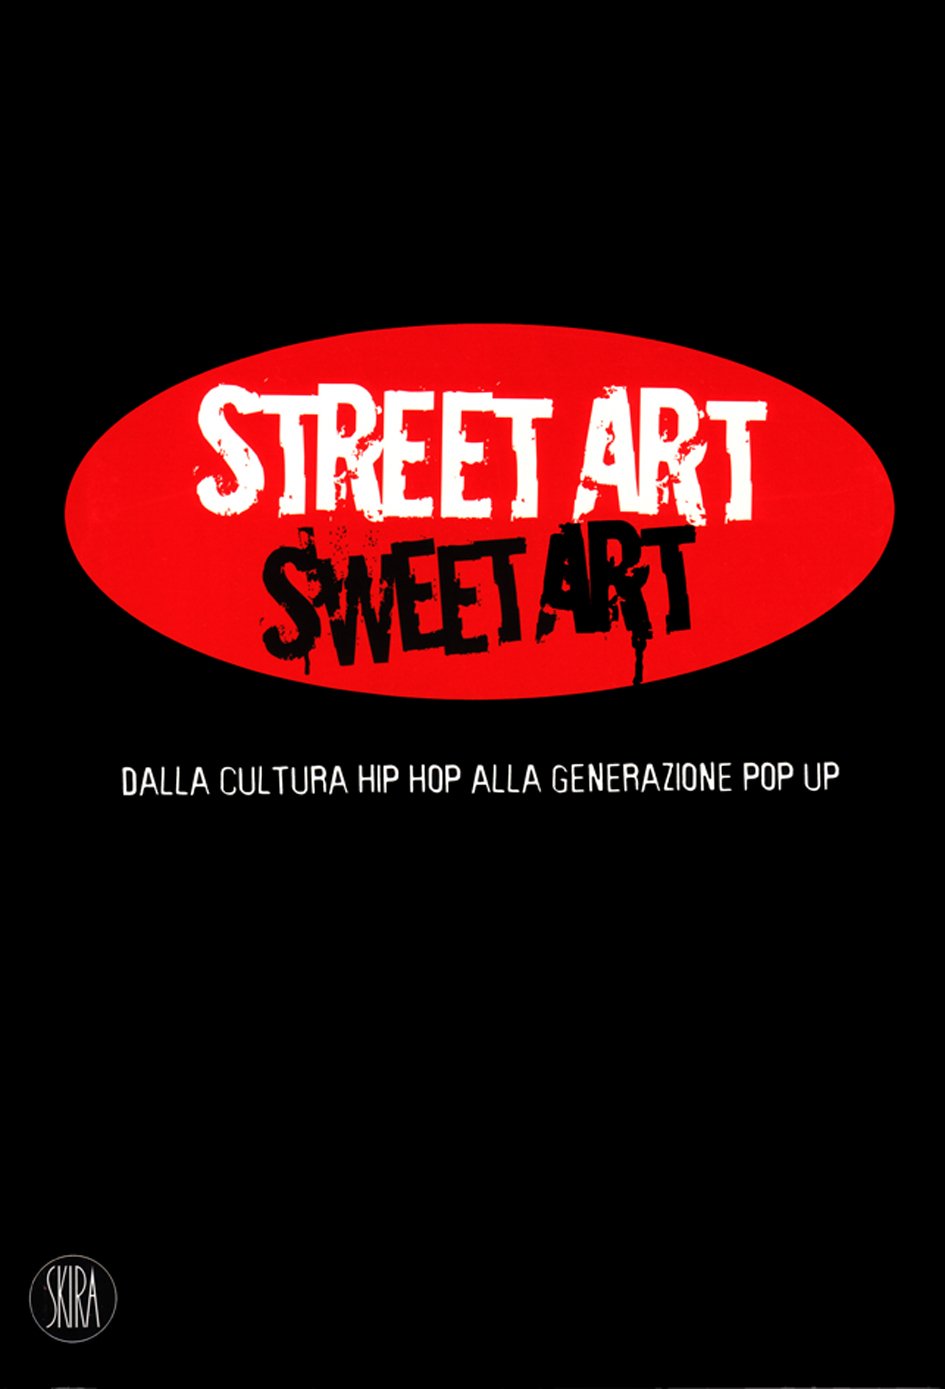 Street Art Sweet Art, il catalogo pubblicato nel 2007 da Skira